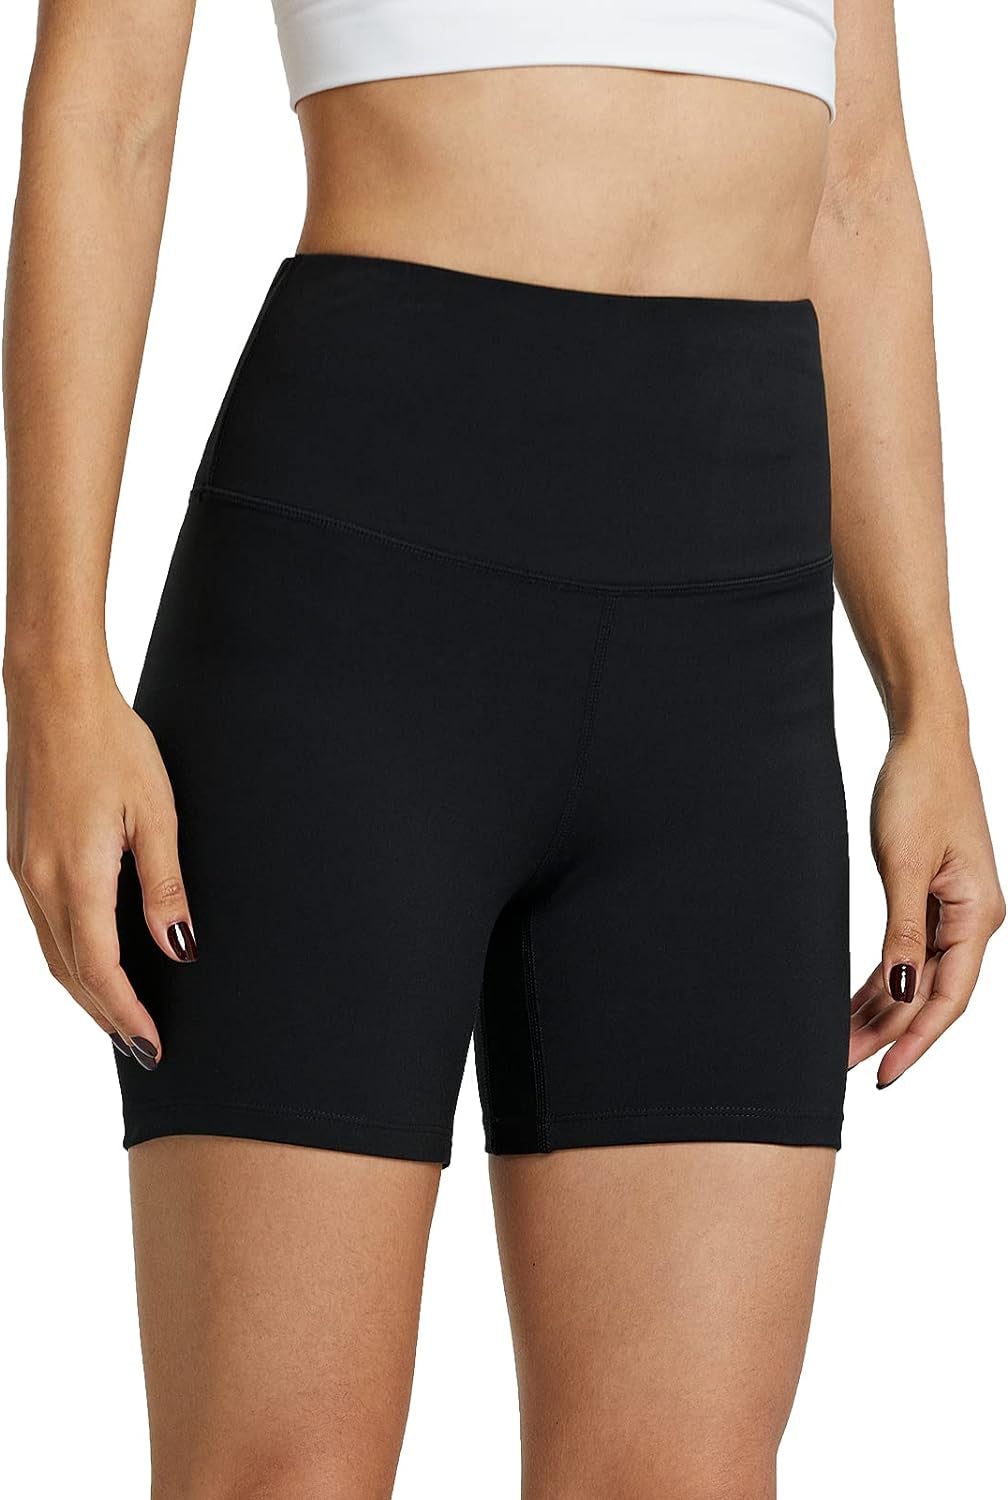 10"/5" Biker Shorts Women High Waisted with 2 Hidden Pockets Workout Athletic Running Yoga Long Shorts